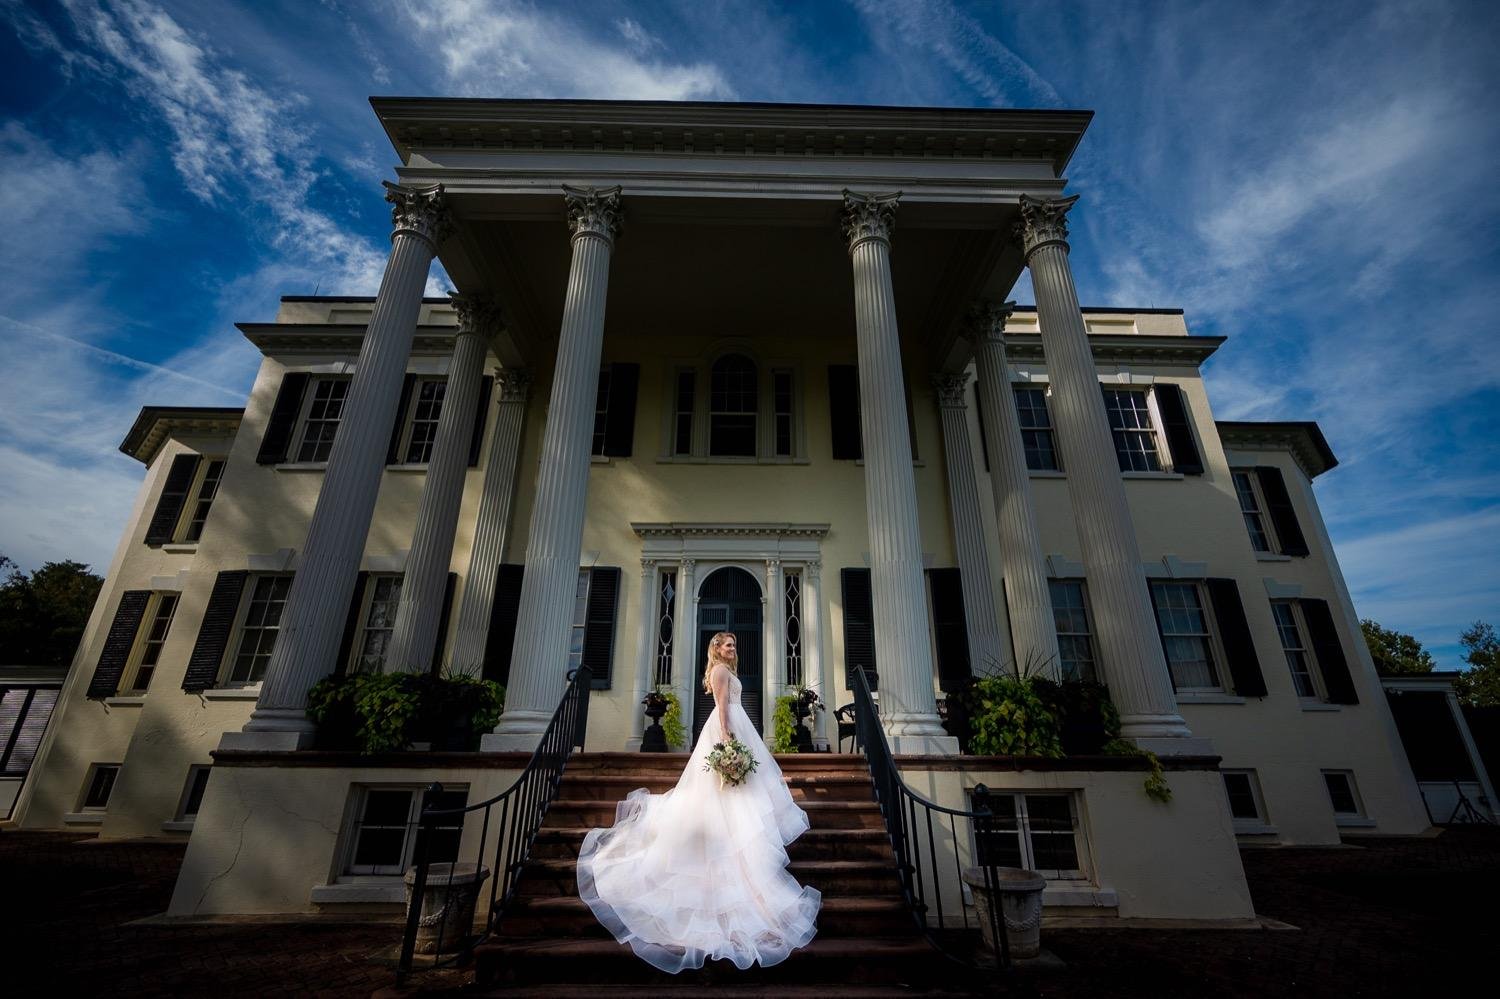 Bride-posing-at-Oatlands-Historic-House-&-Gardens-documentary-wedding-photographer-Mantas-Kubilinskas.jpg-2.jpg